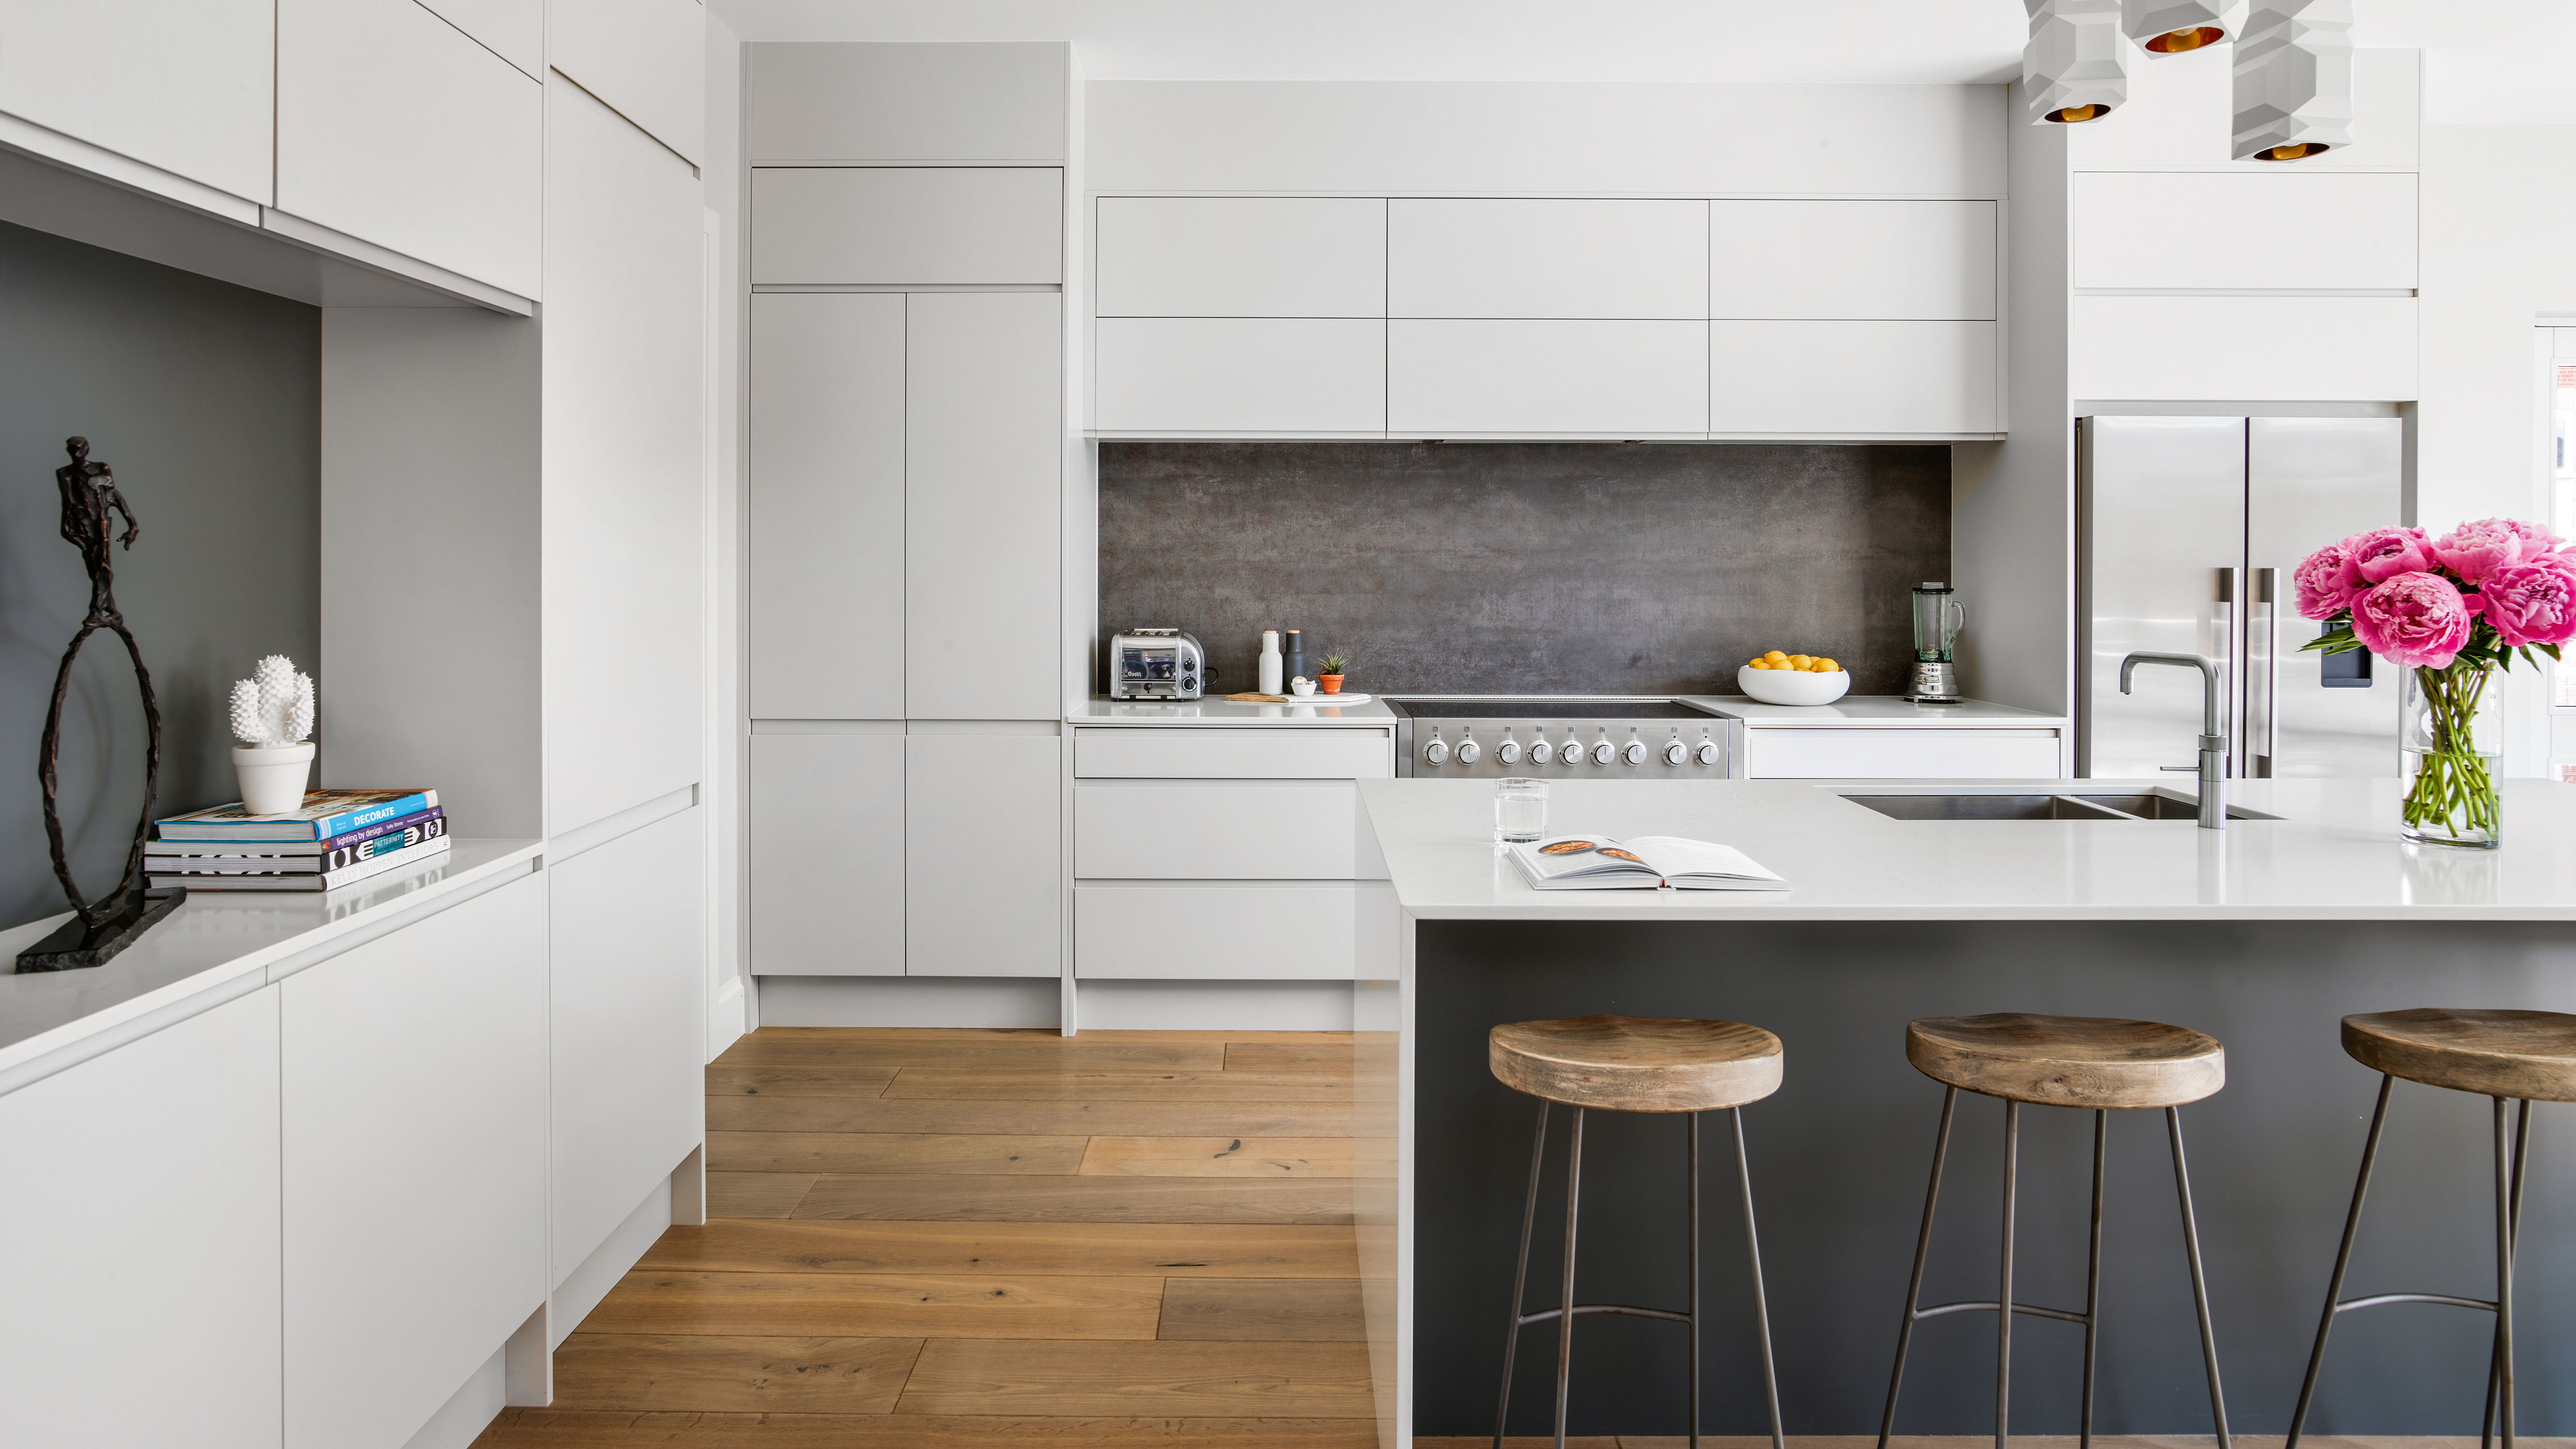 Minimalist kitchen ideas 20 simple schemes for the modern home  